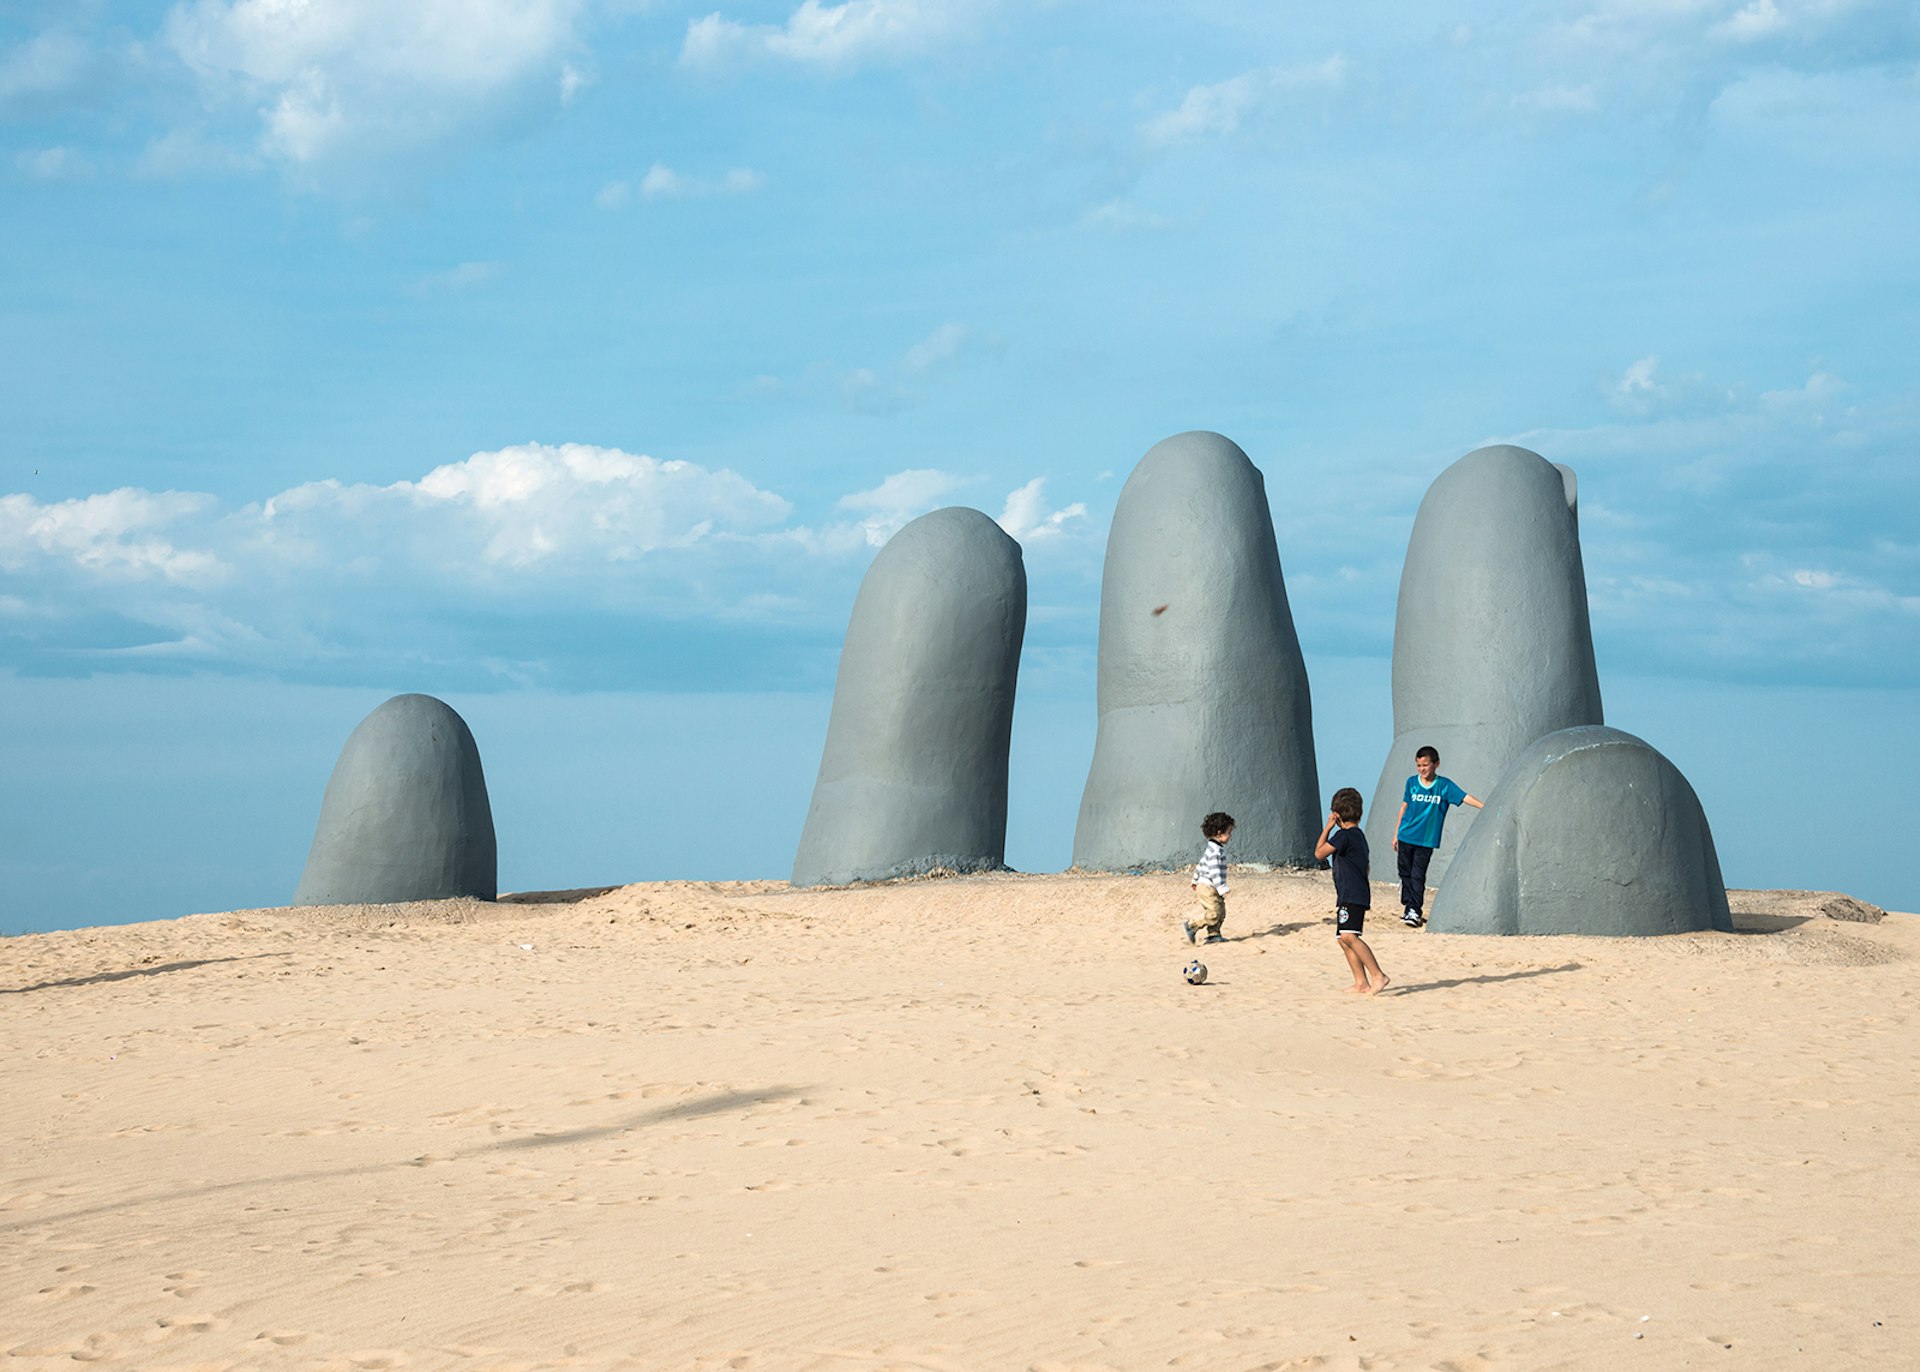 A sculpture on the beach in Punta del Este, Maldonado, Uruguay © Ksenia Ragarina / Shutterstock